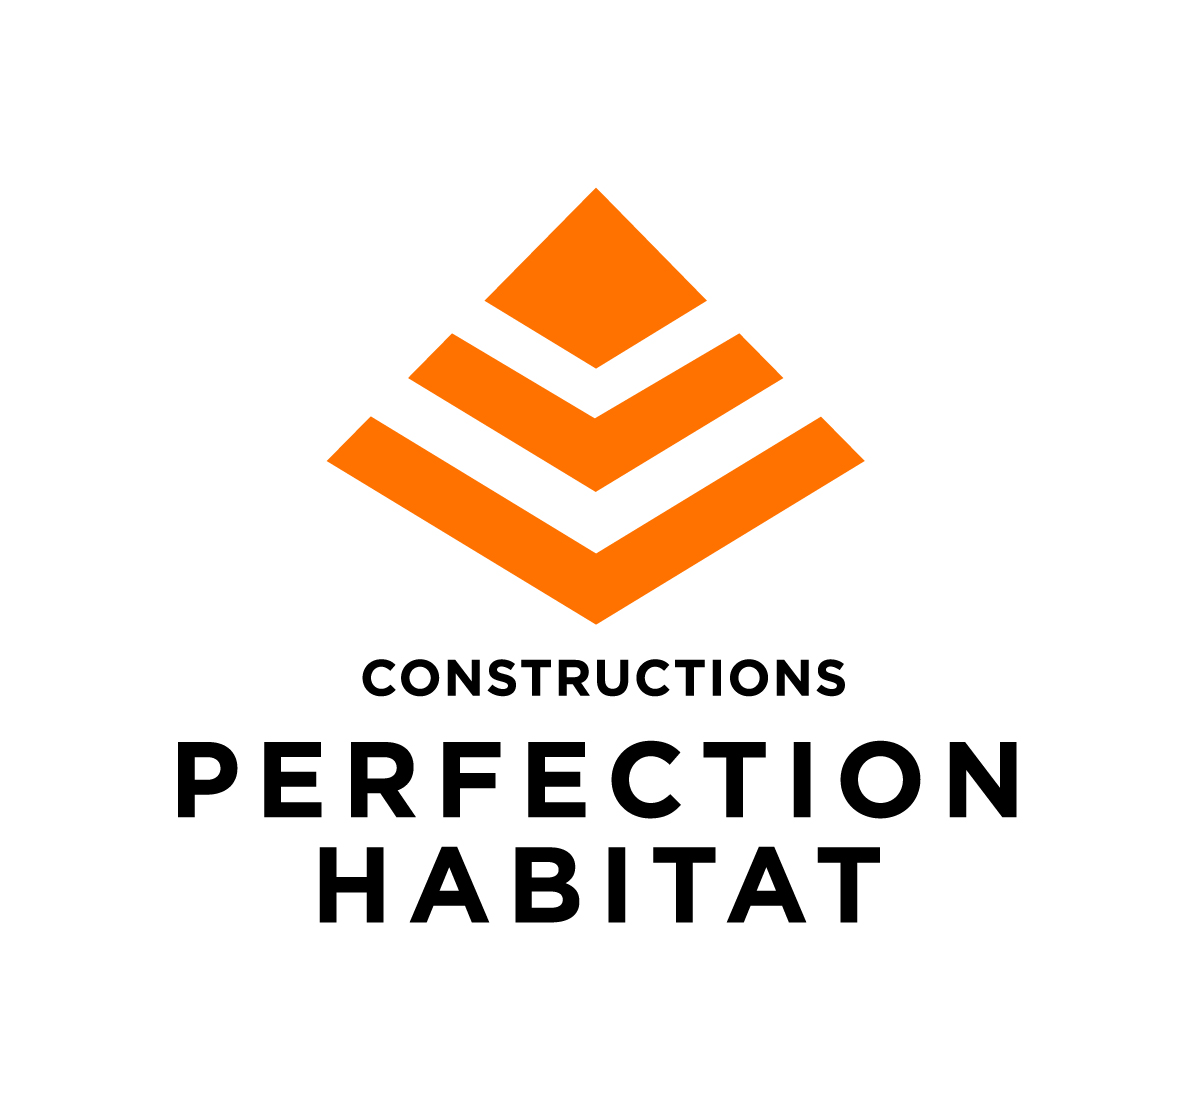 Perfection Habitat